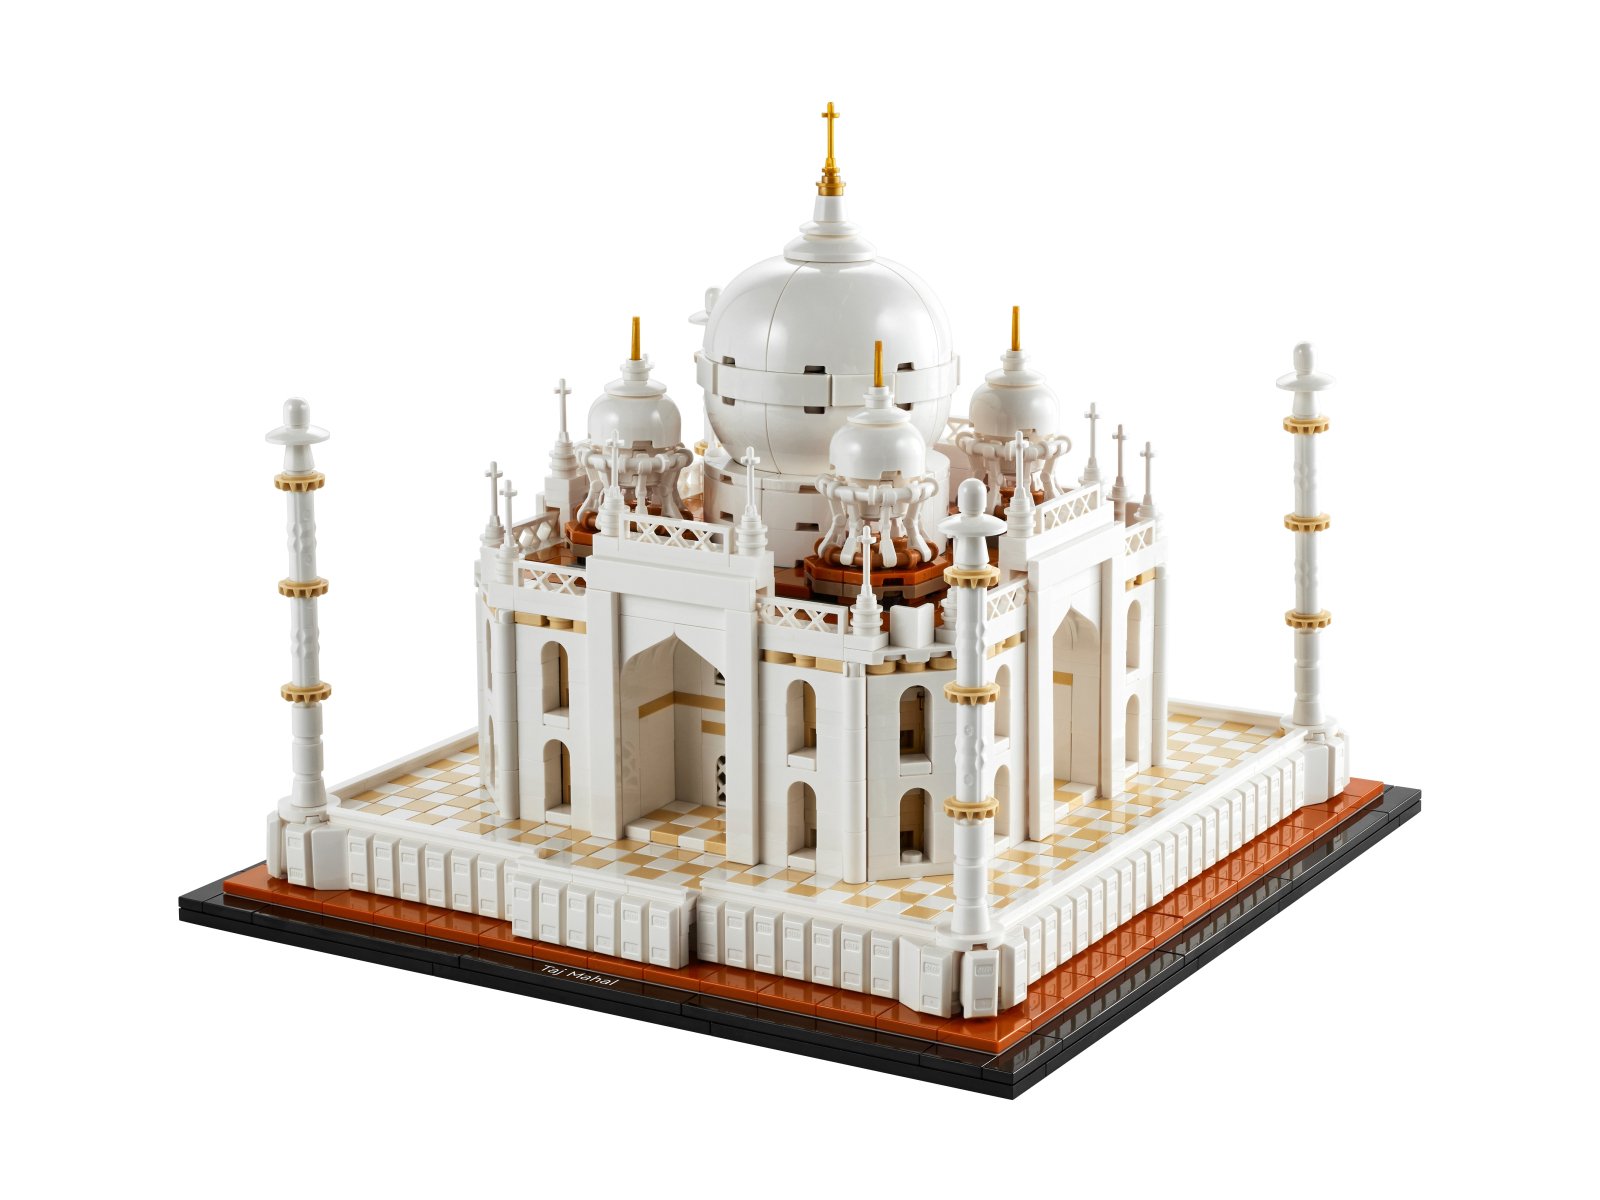 LEGO Architecture 21056 Tadż Mahal